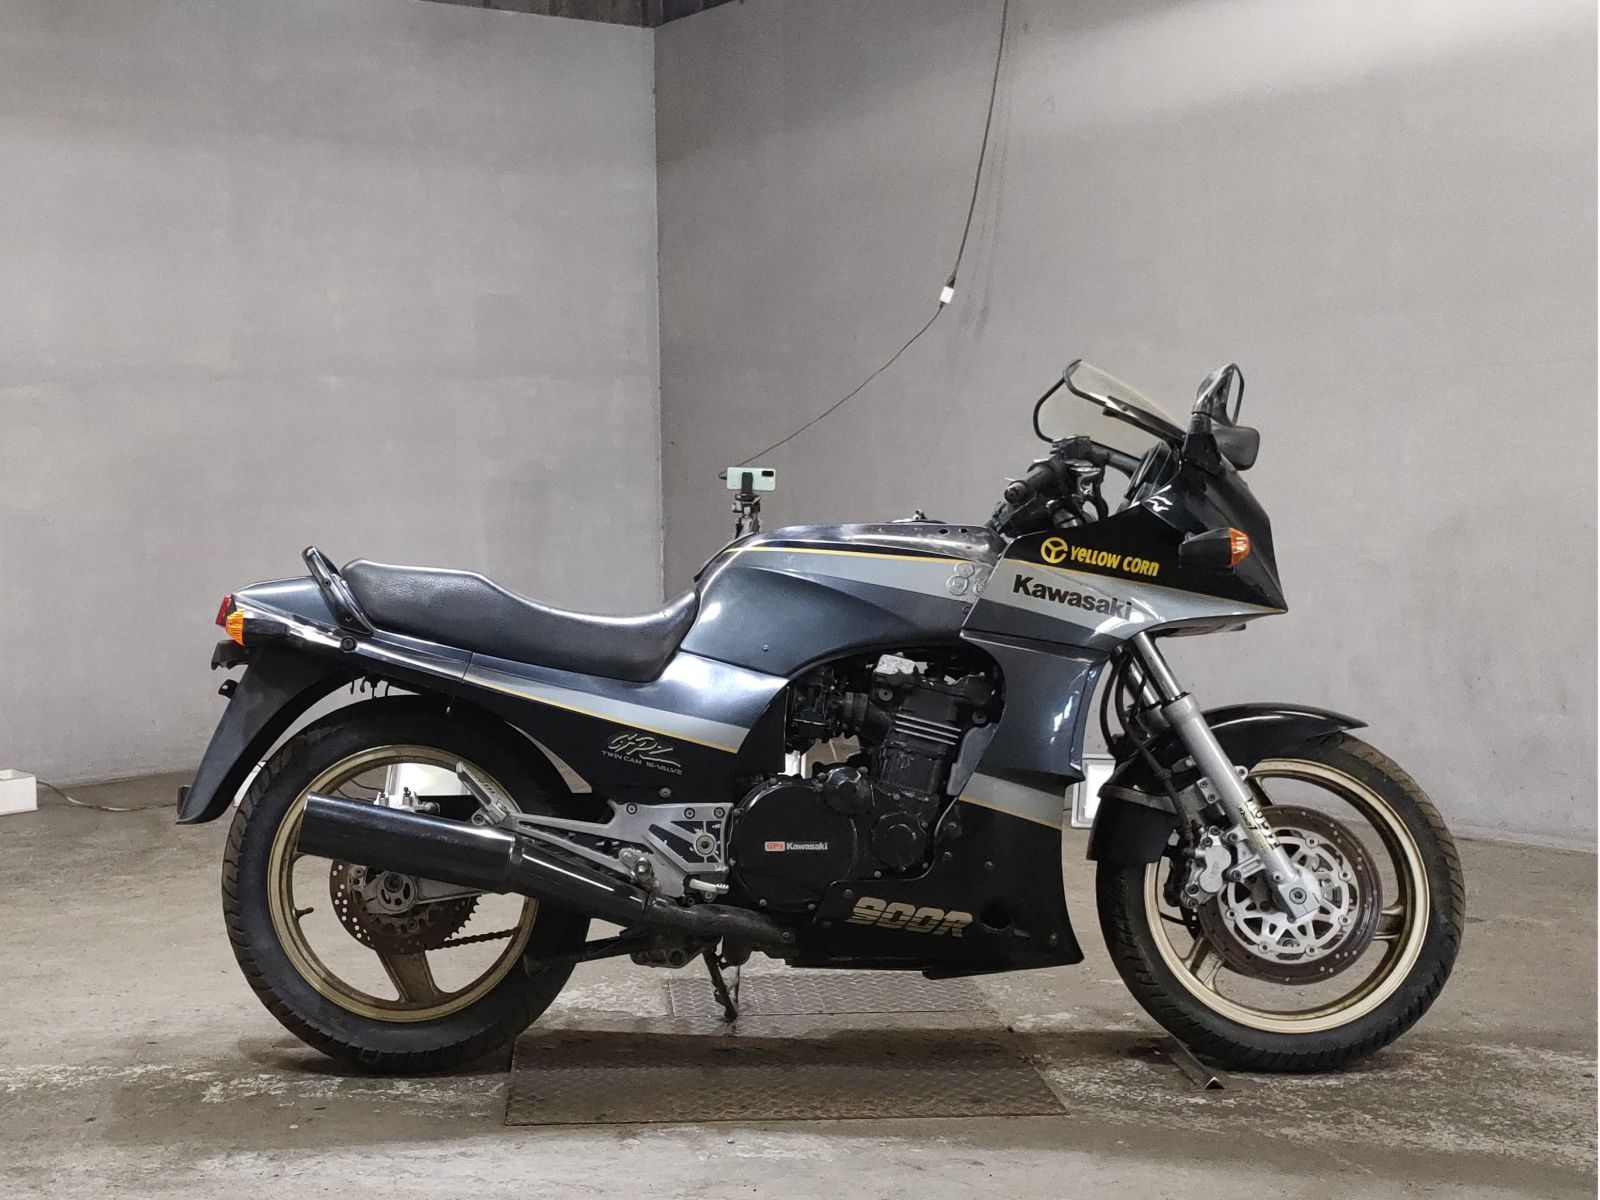 Kawasaki GPZ 900 ZX900A - купить недорого